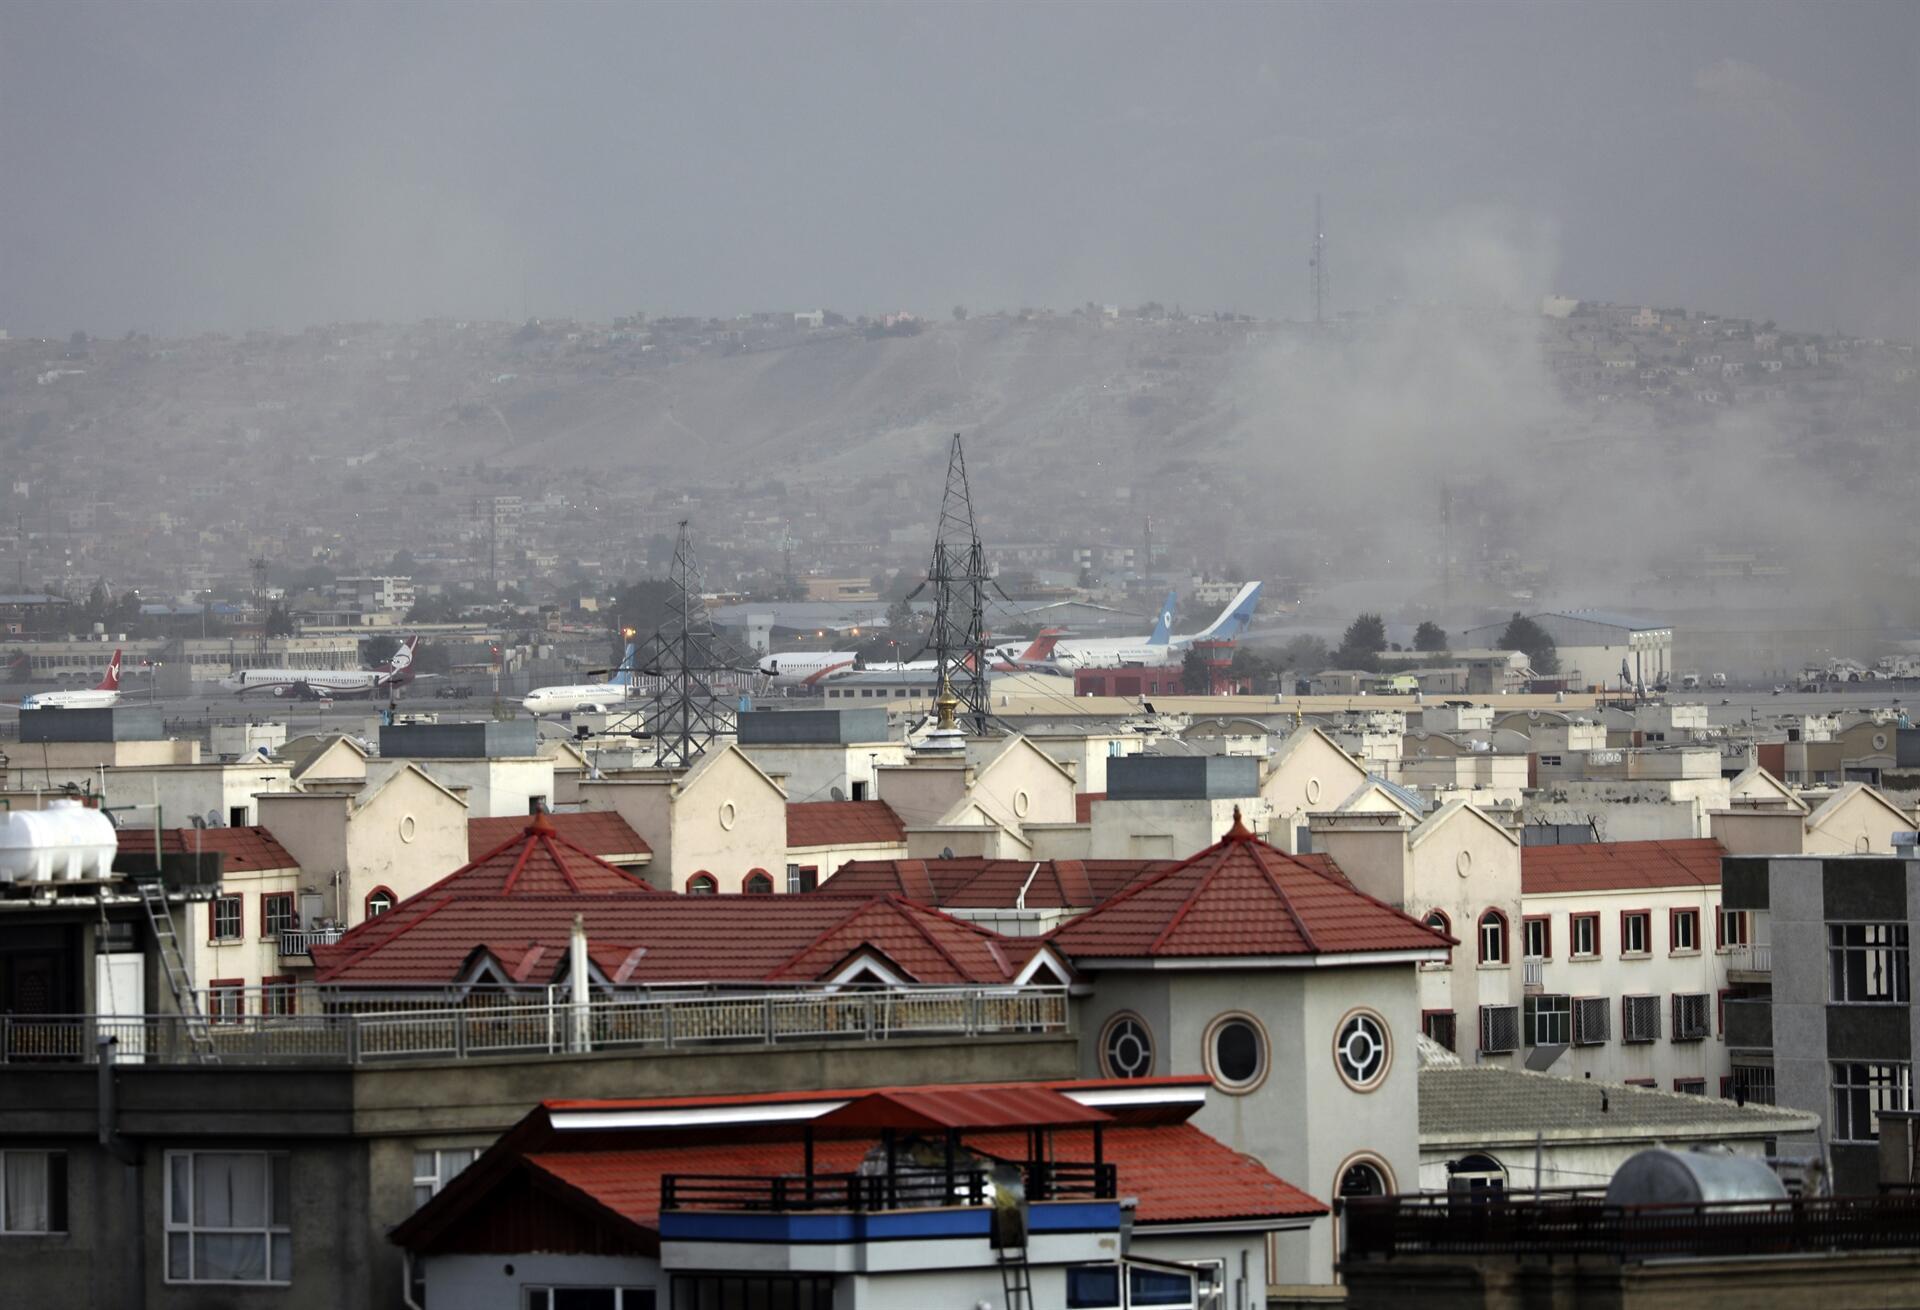 Kabul airport attack